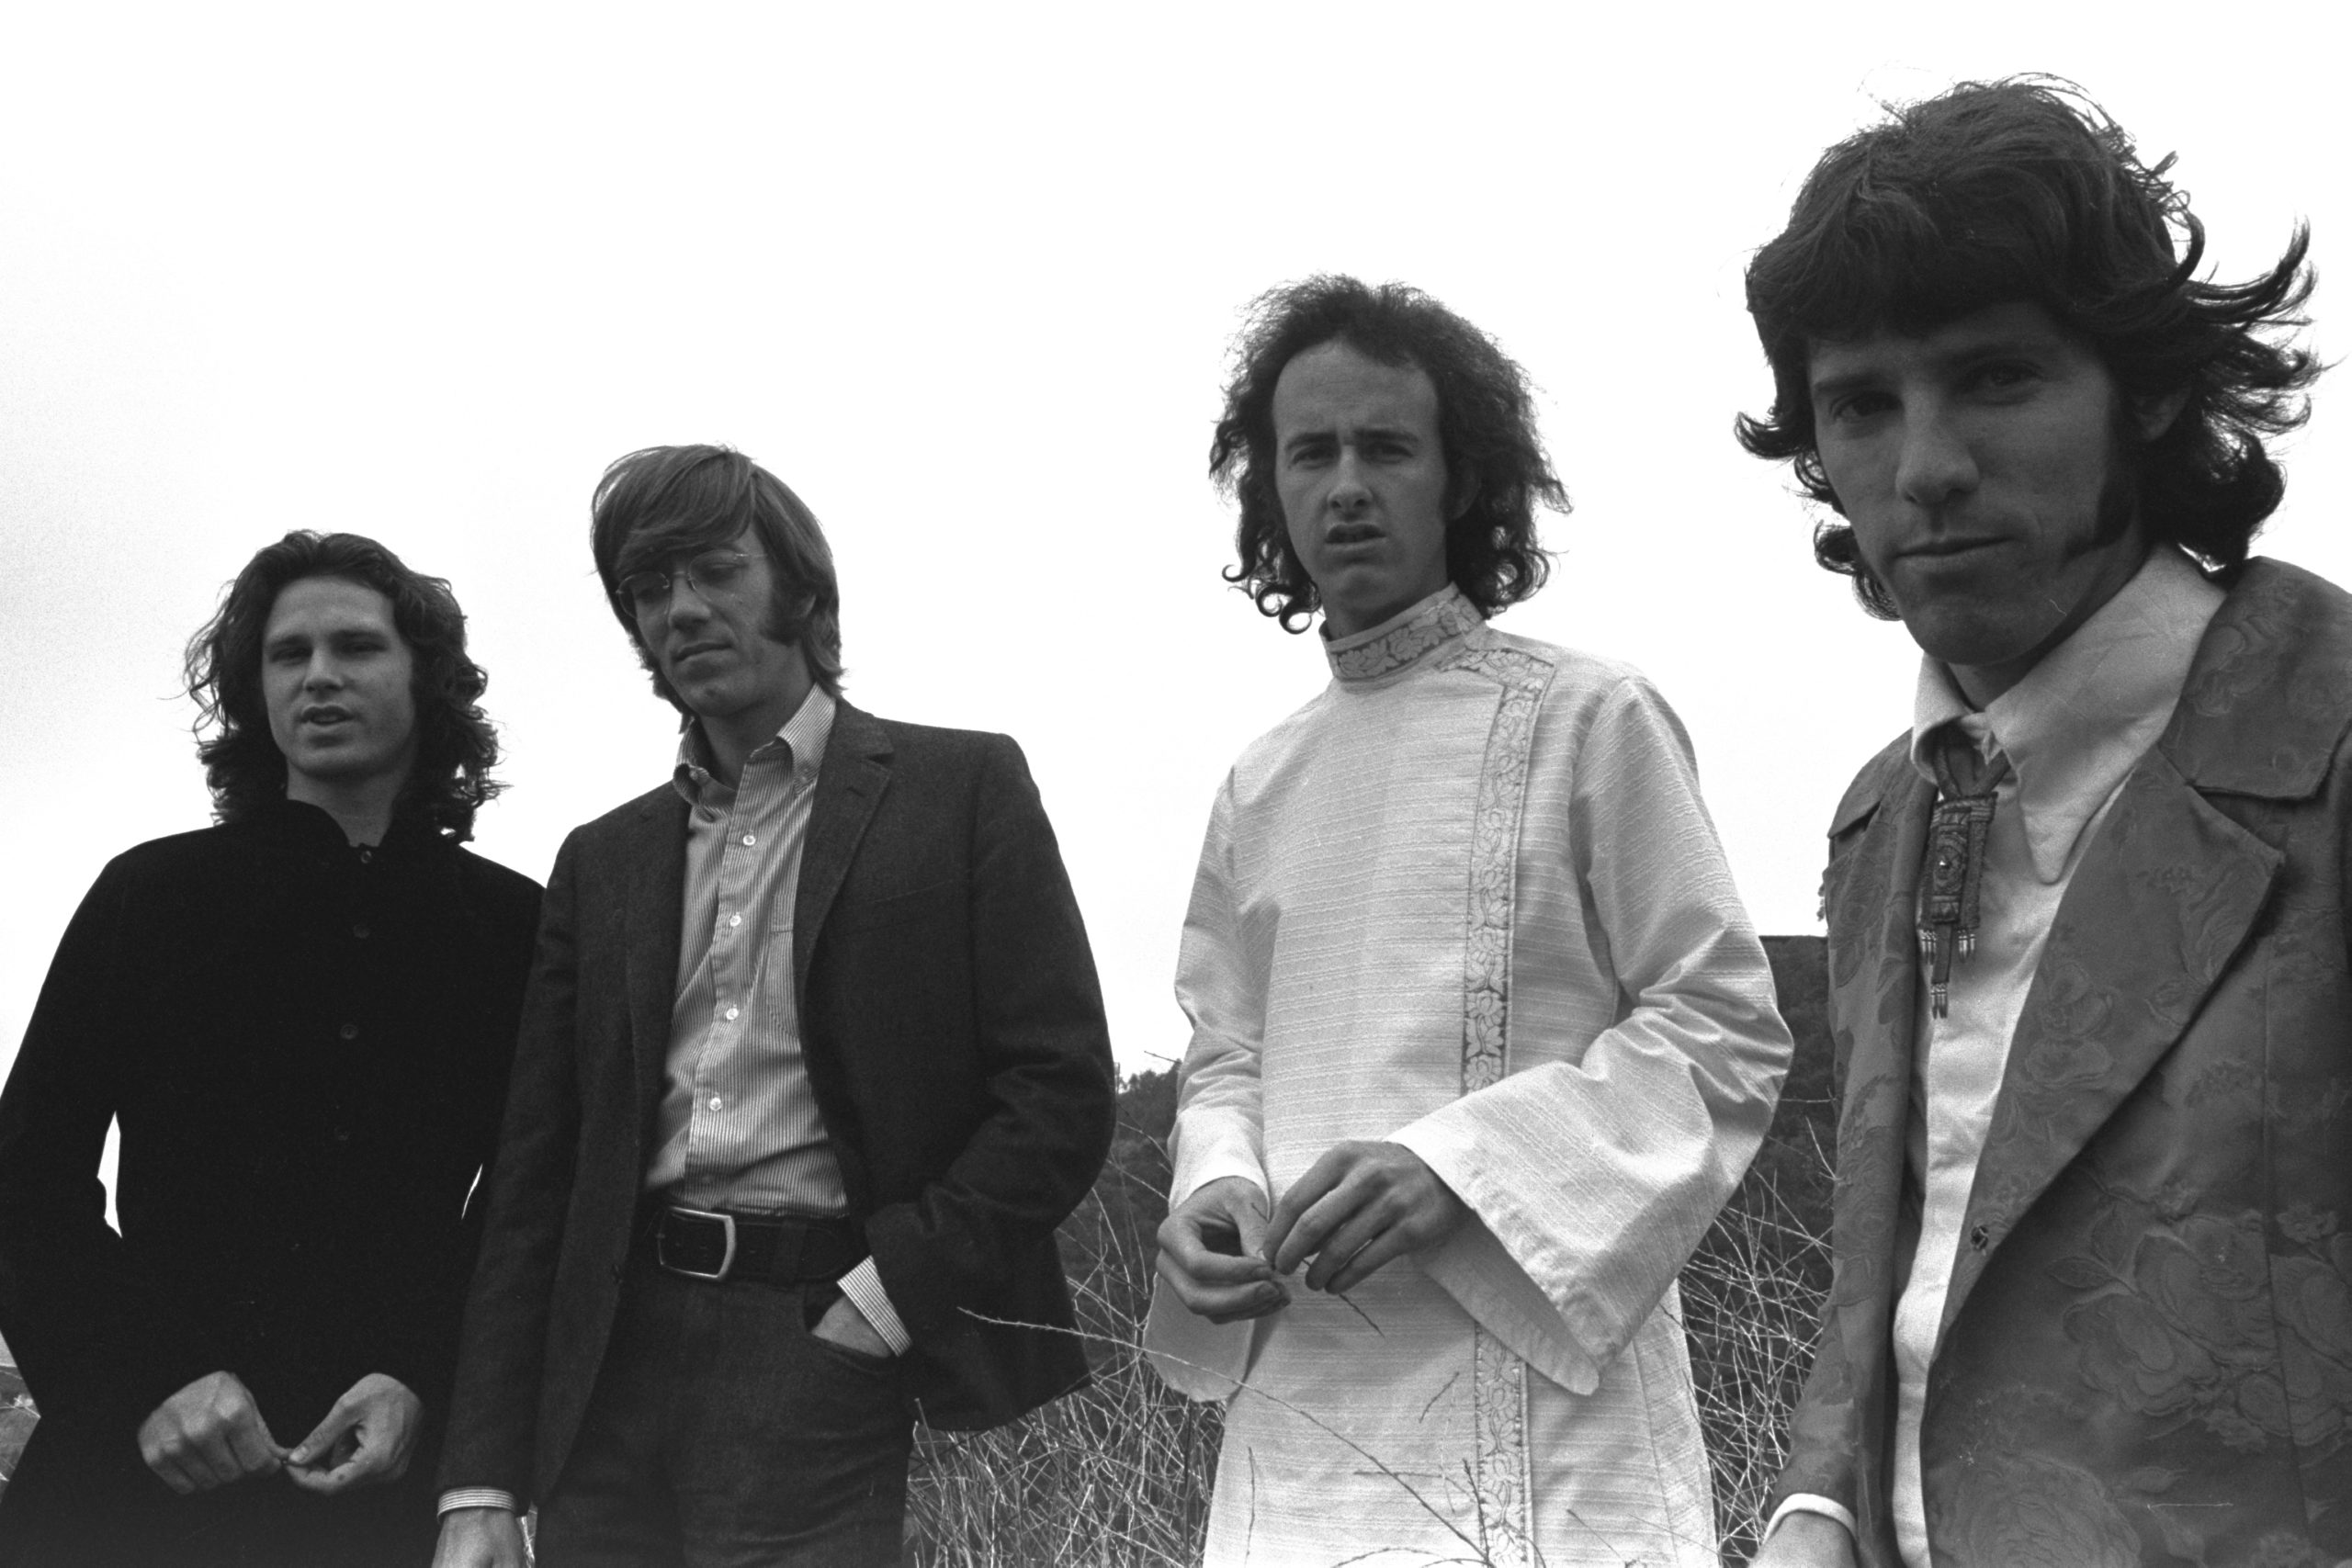 The Doors: celebrating the late Ray Manzarek